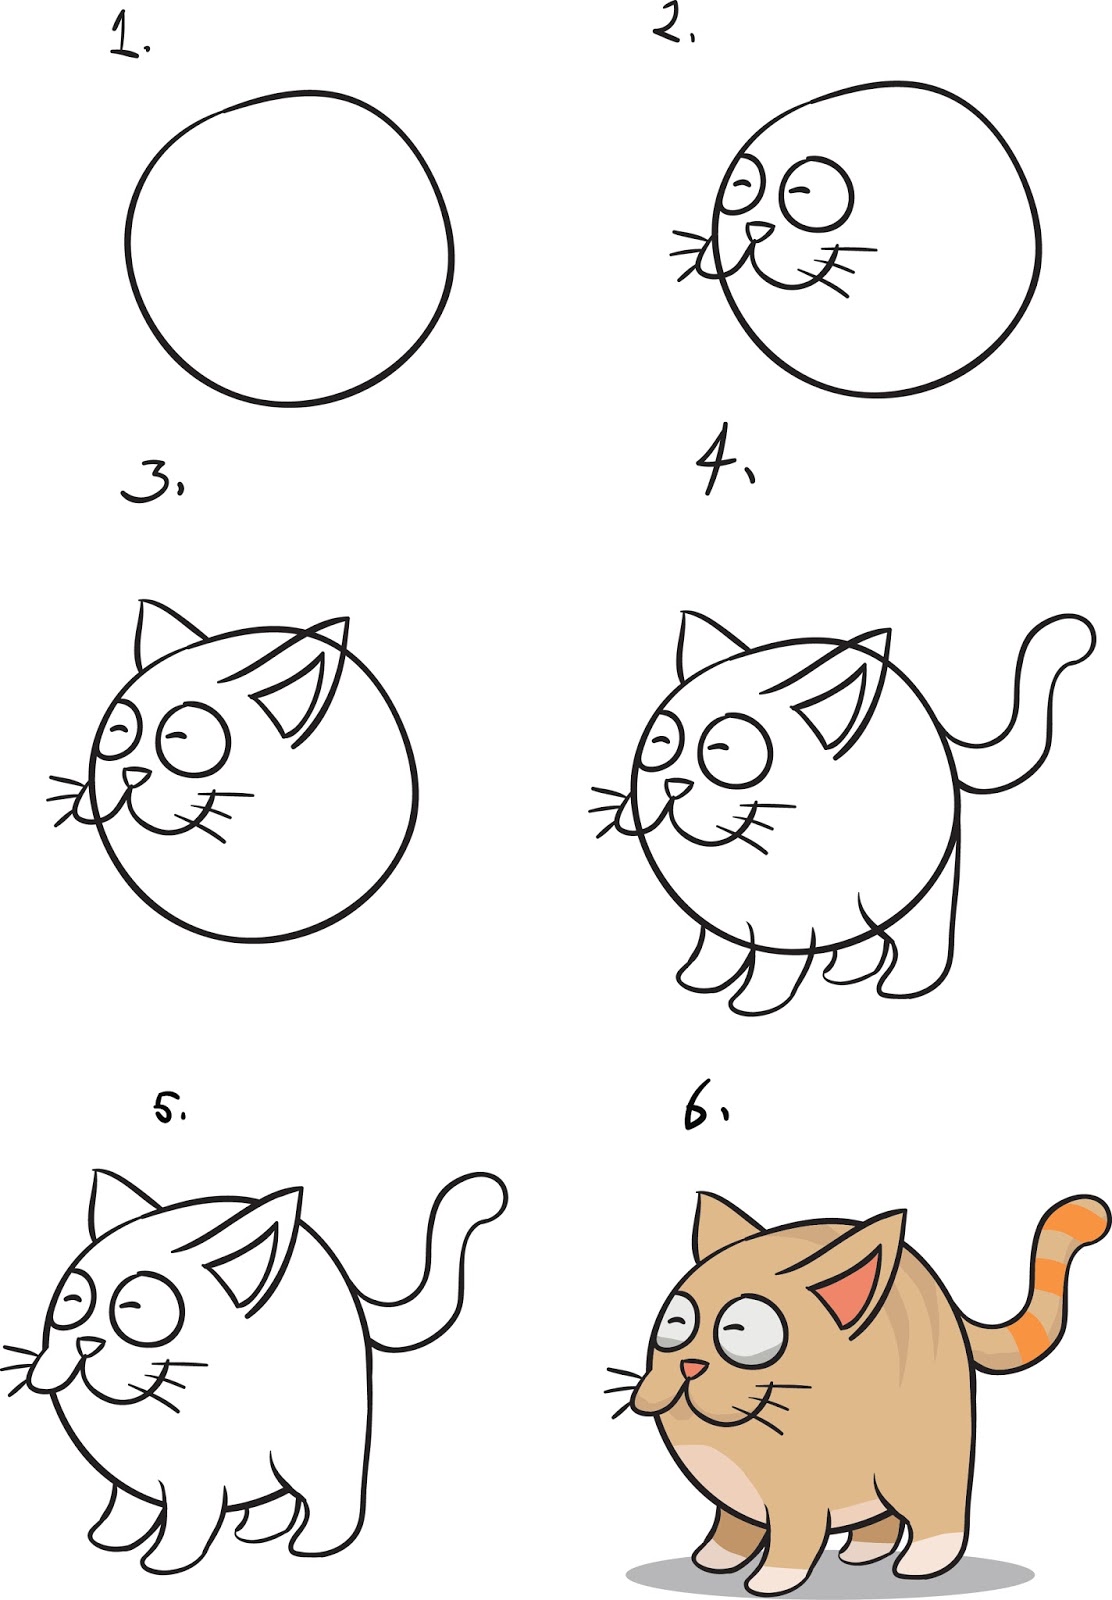 Kumpulan Mewarnai Gambar Sketsa Hewan Kucing Yang Mudah Desain